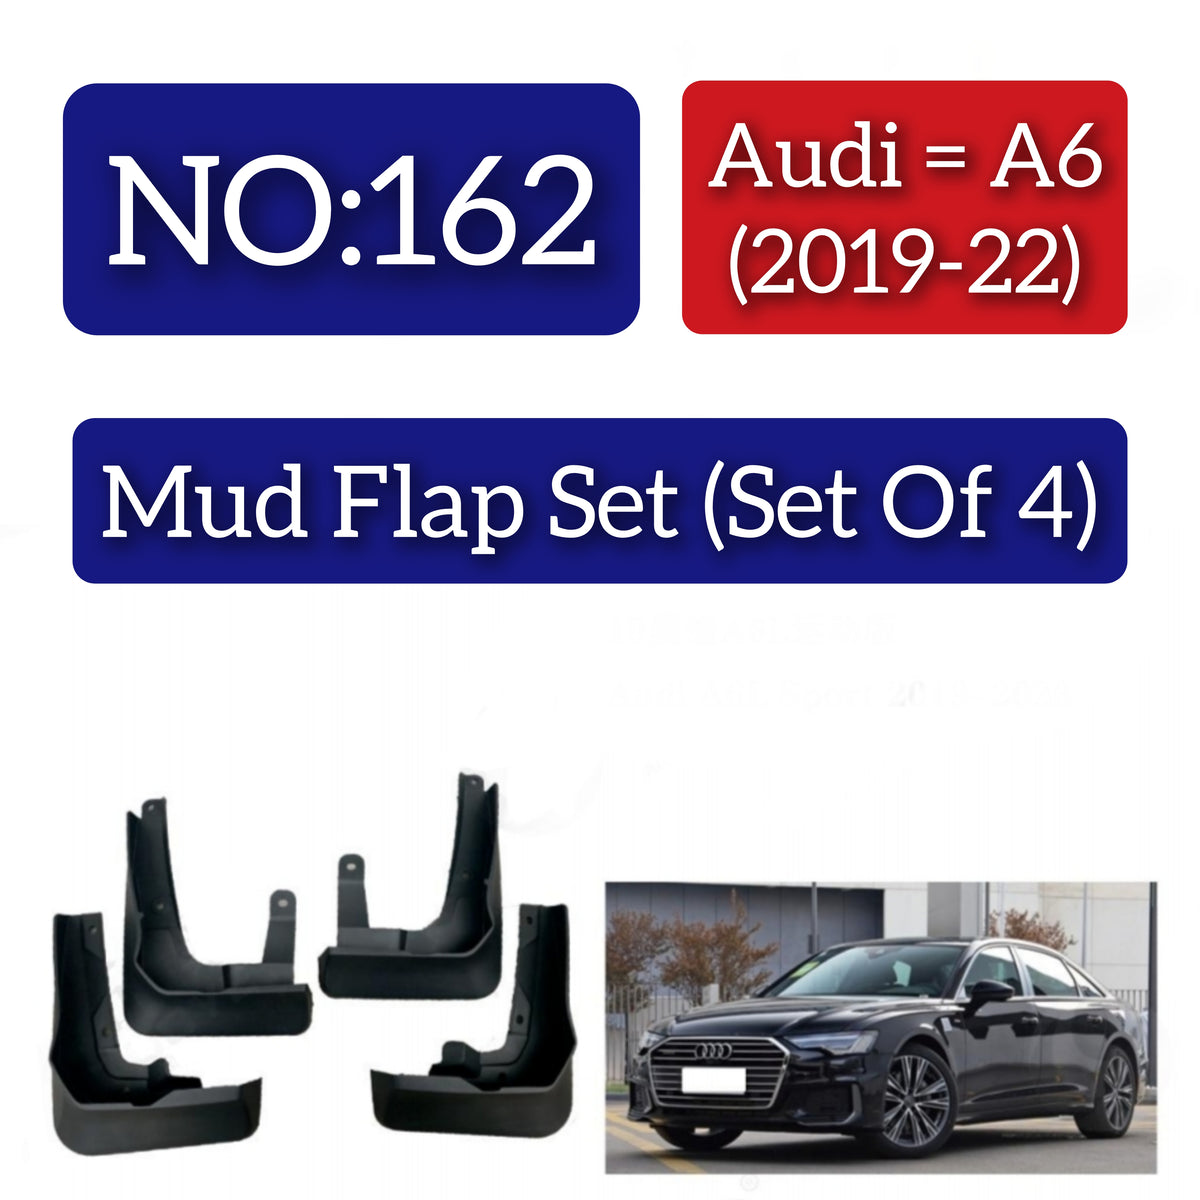 Audi A6 (2019-22) Mud Flap Set (Set of 4) Tag 162